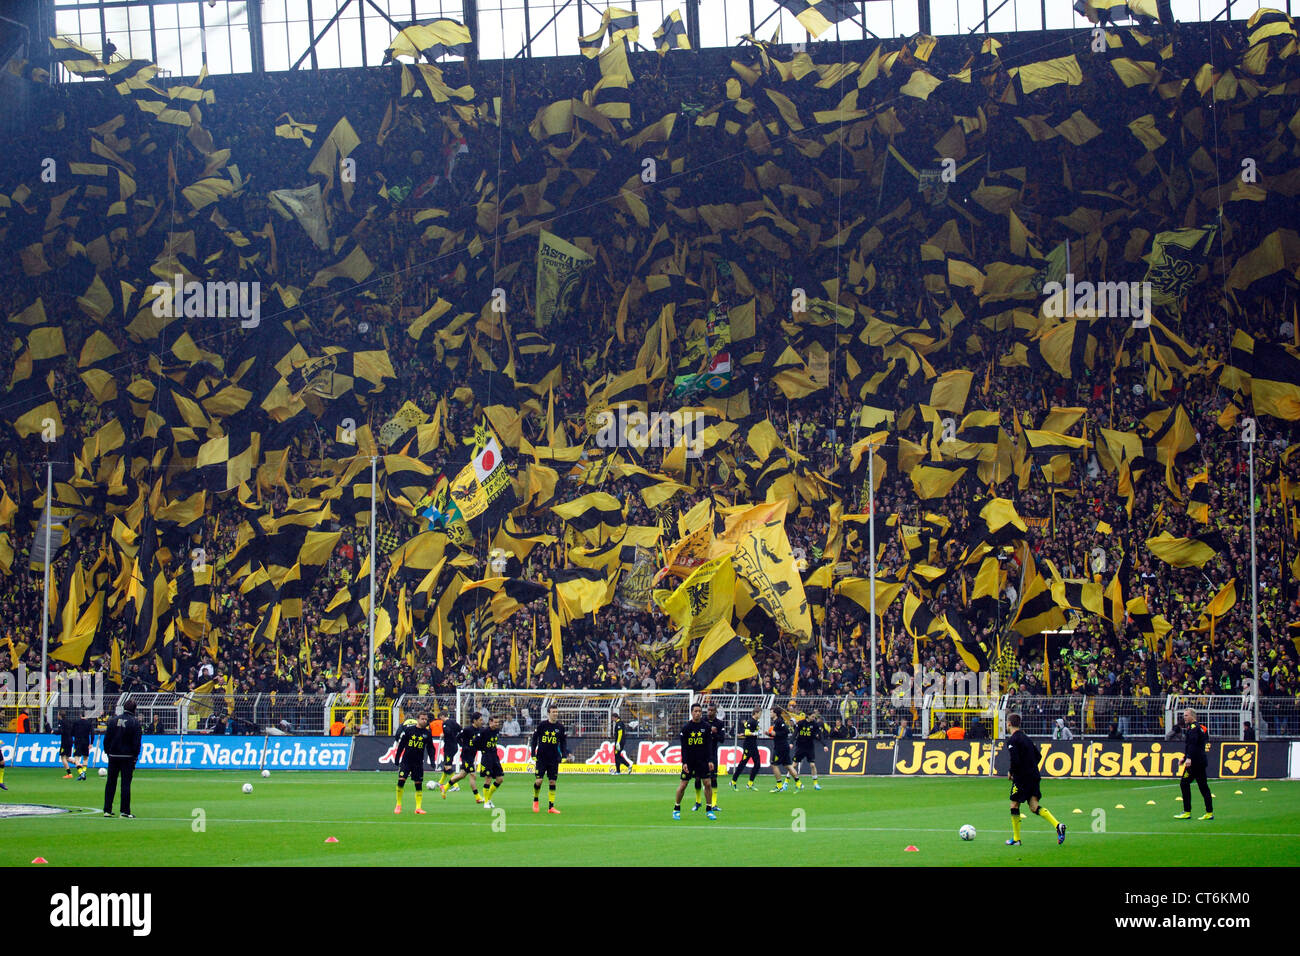 Sports, football, Bundesliga, 2011/2012, Borussia Dortmund contre SC Freiburg 4:0, le stade Signal Iduna Park de Dortmund, tribune sud, football fans acclamant le championnat allemand de football du Borussia Dortmund, l'exaltation, mer de drapeaux Banque D'Images